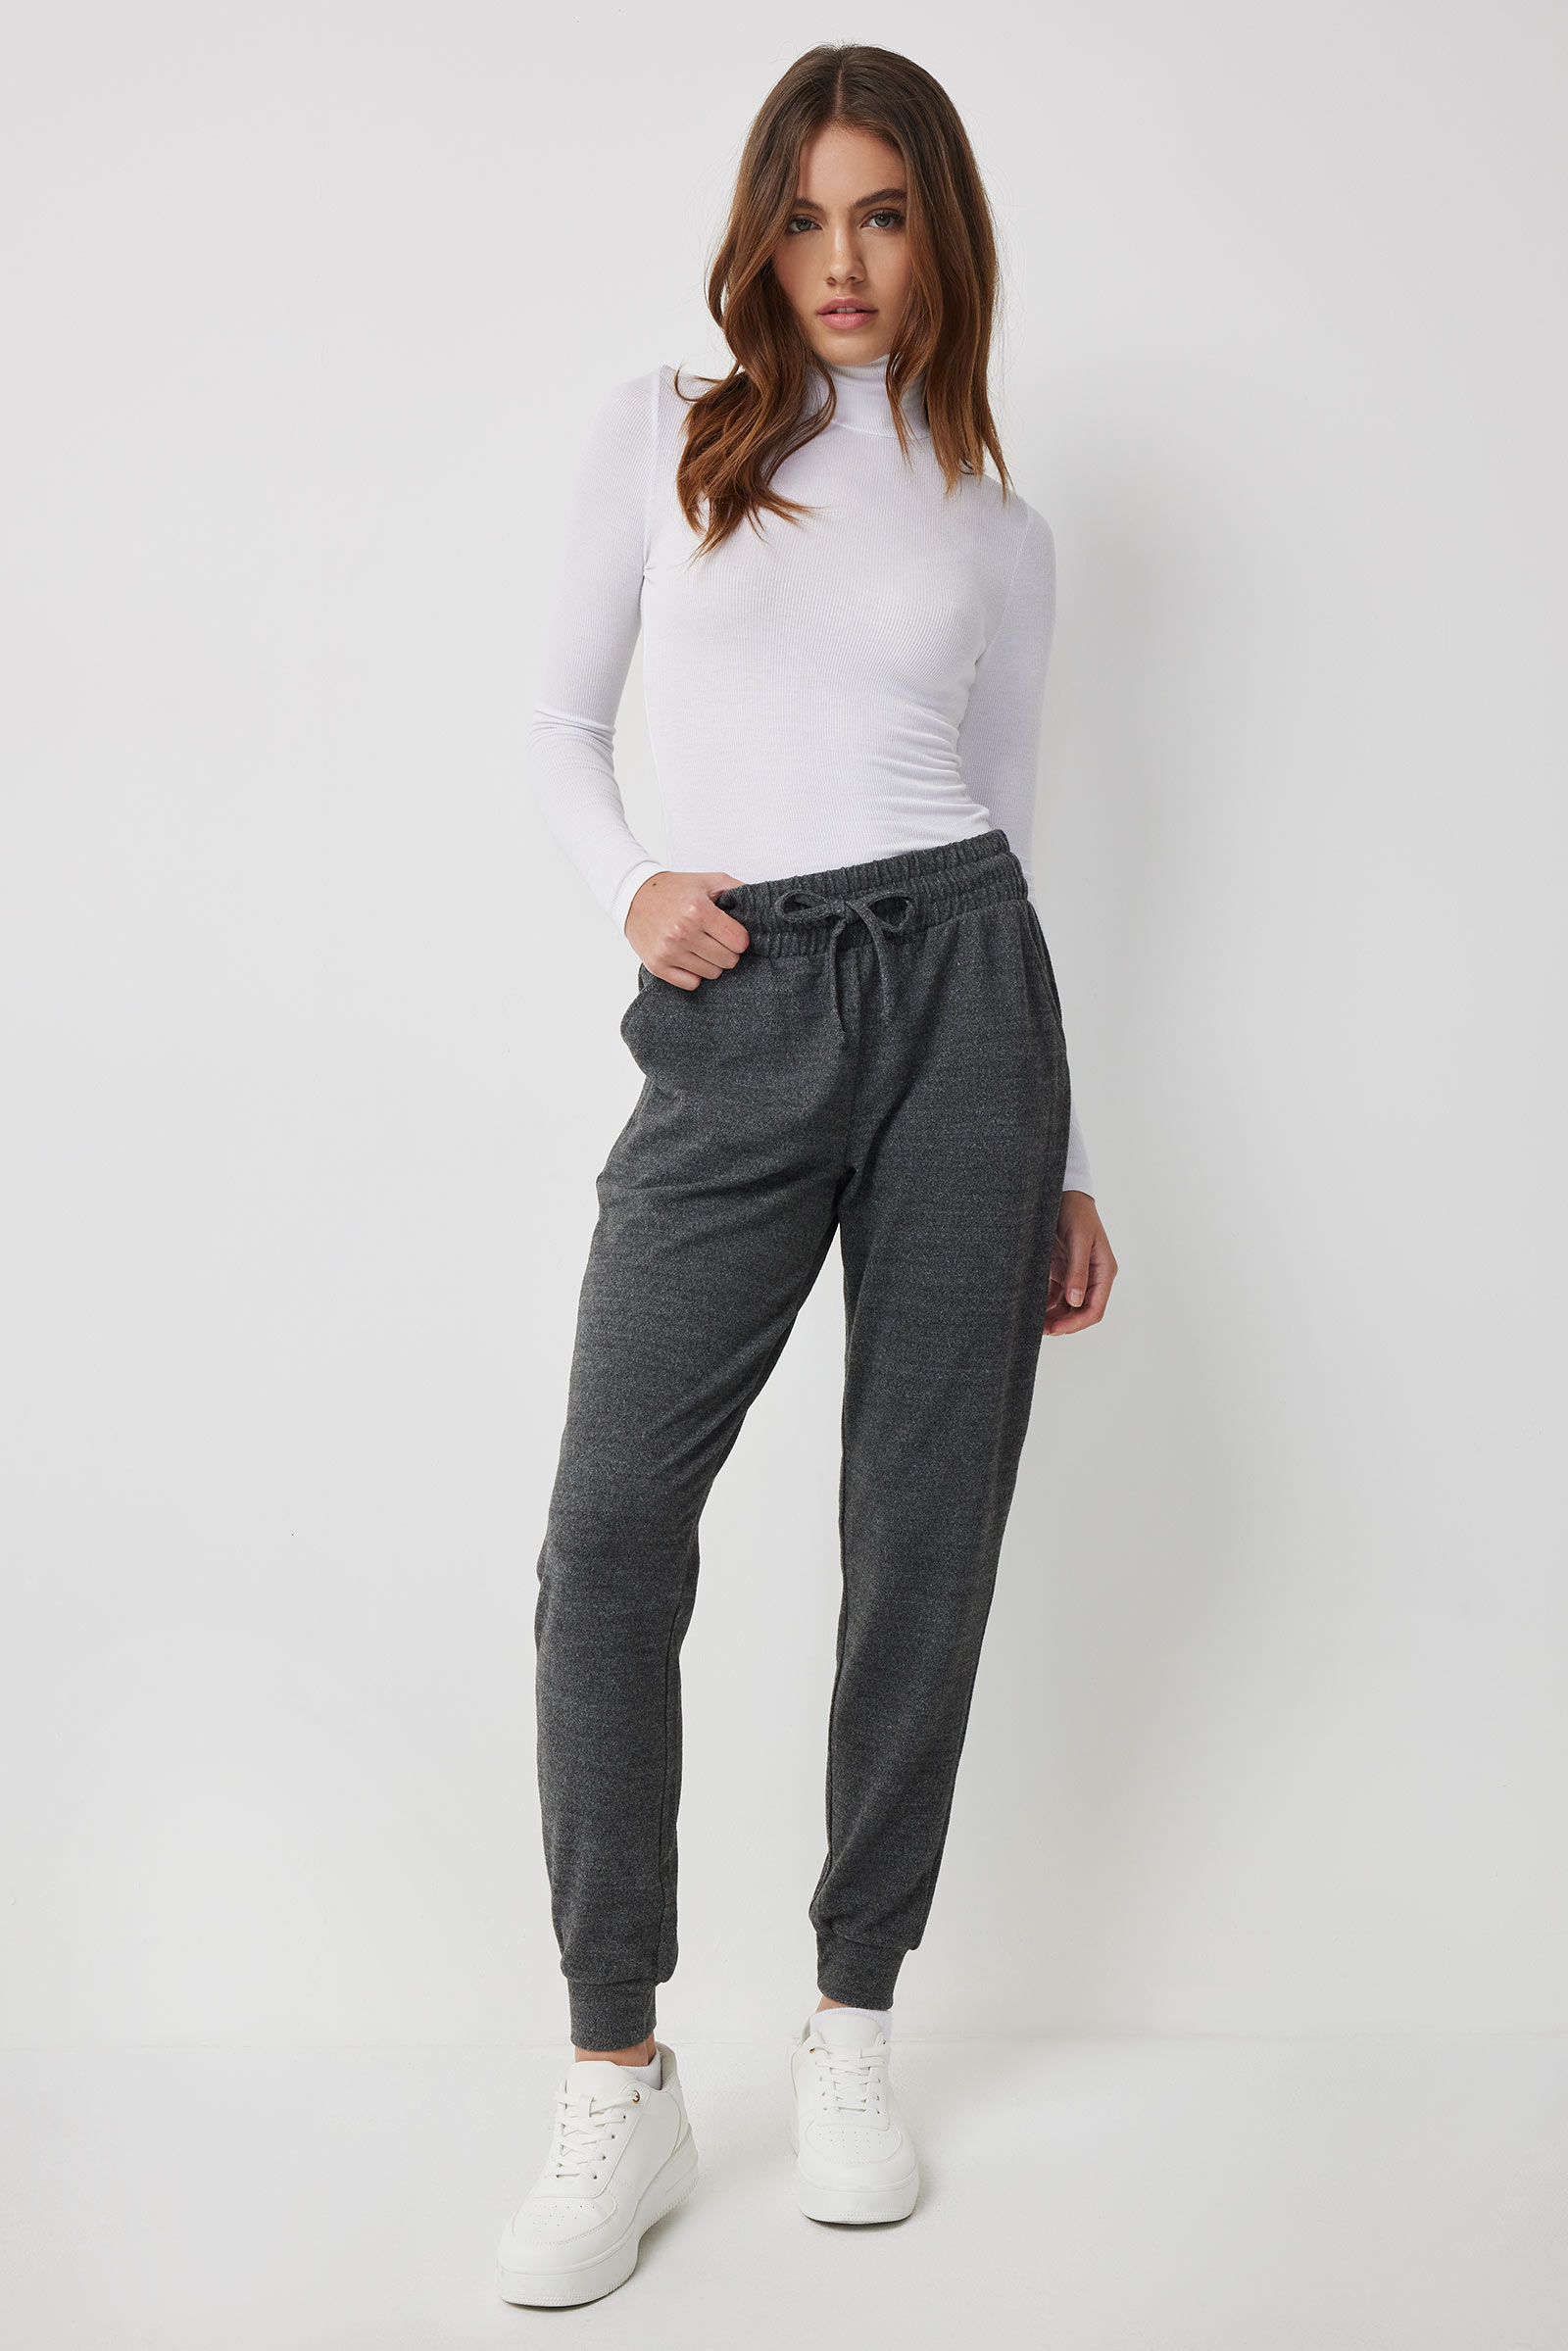 Ardene Light Knit Sweatpants in Light Grey | Size | Polyester/Spandex